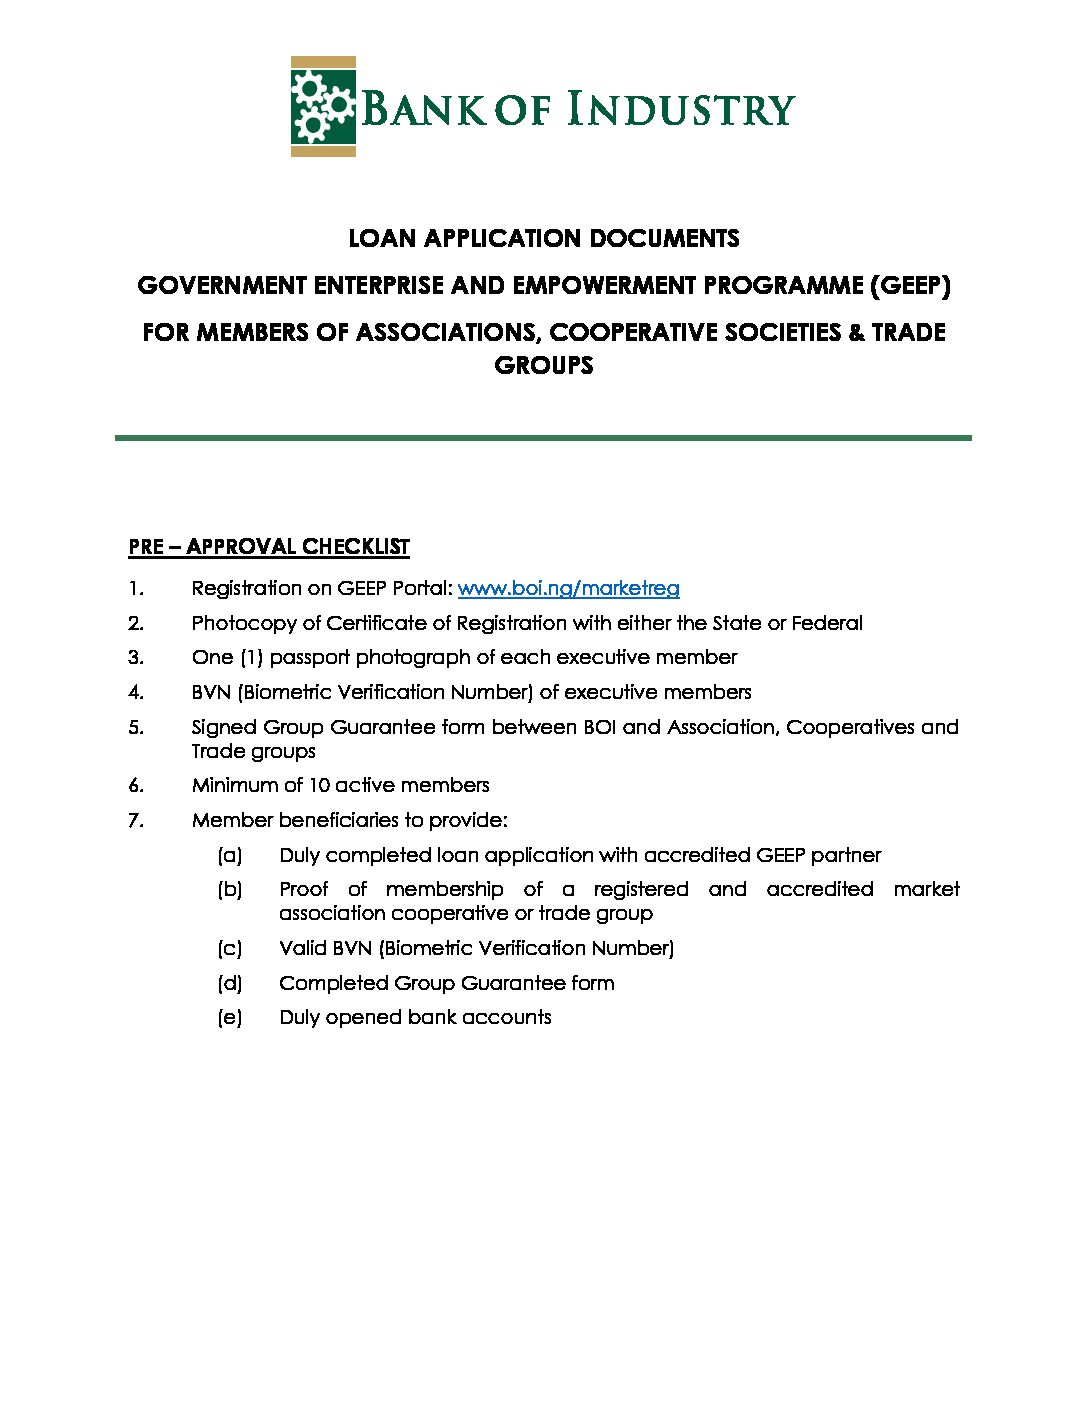 LOAN APPLICATION CHECKLIST GEEP 1 pdf Abia State Civil Service Commission Recruitment